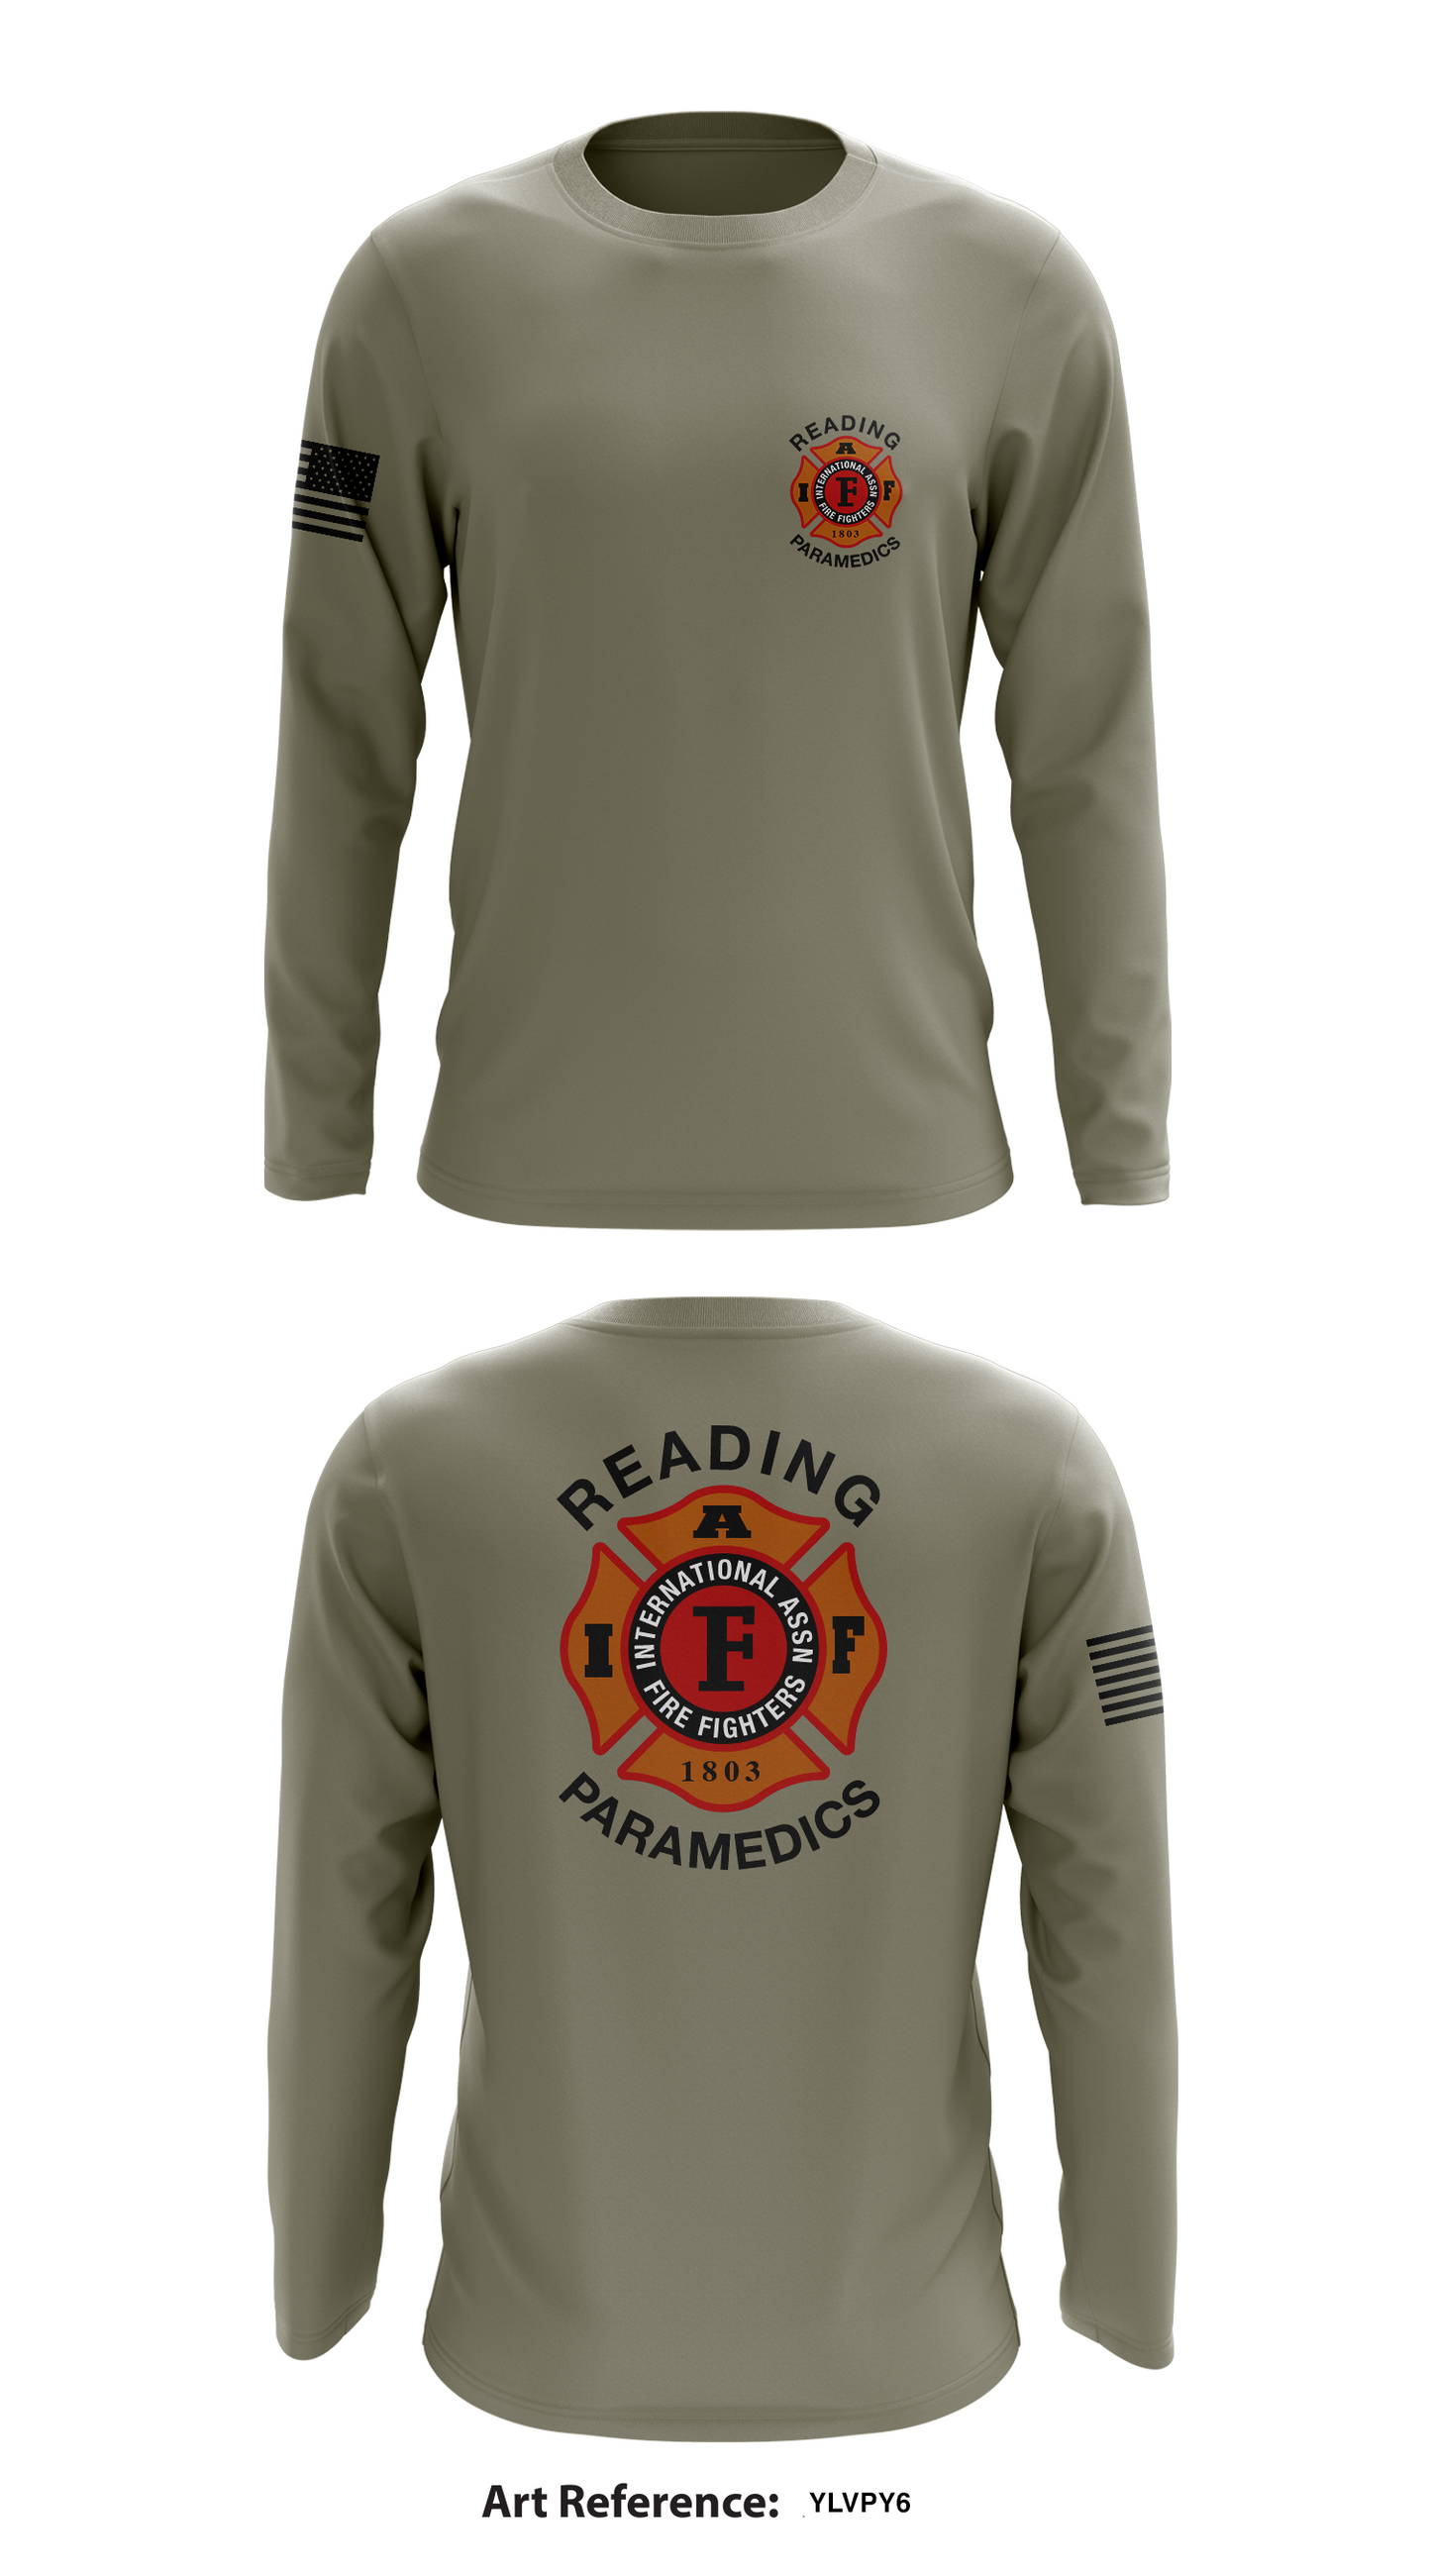 Reading Fire Department Paramedics Store 1 Core Men's LS Performance Tee - yLvpY6